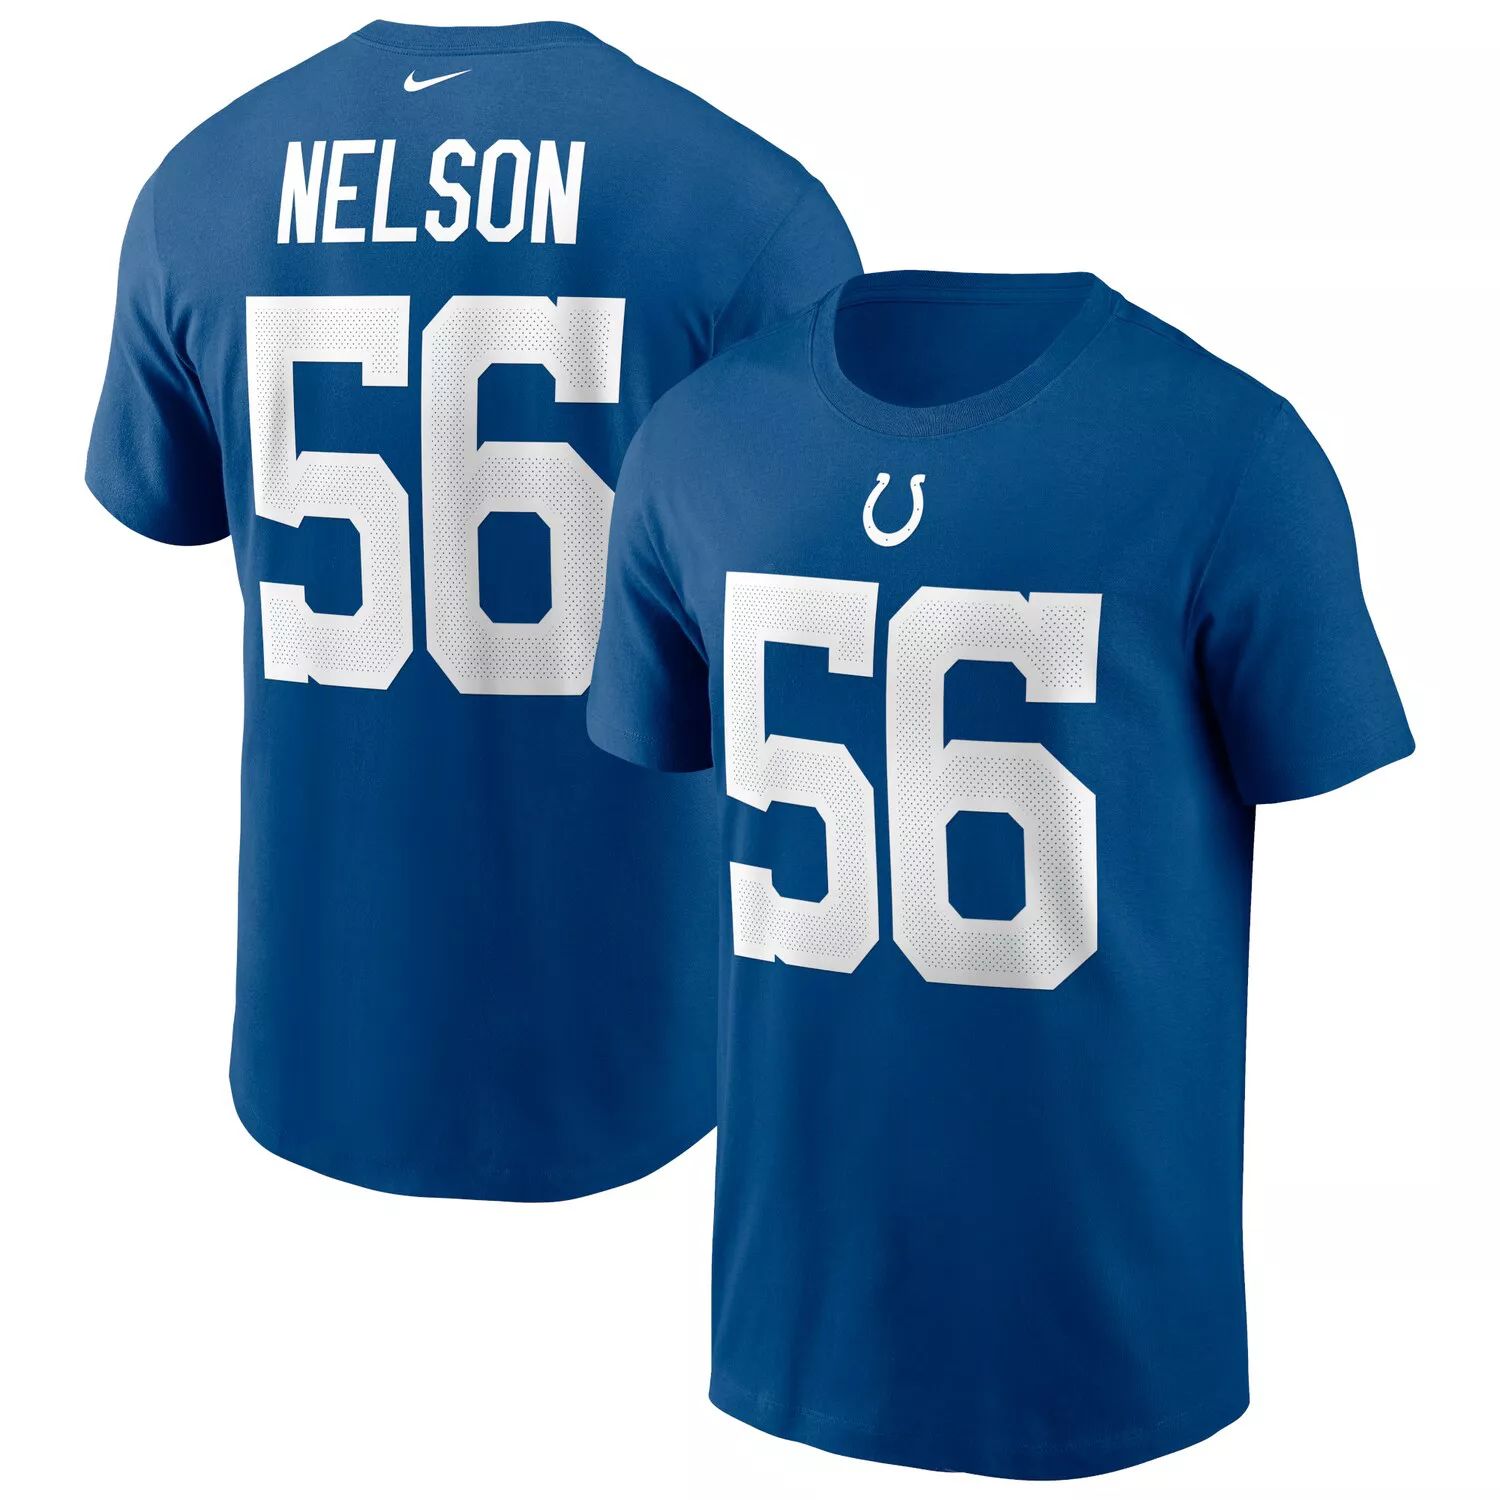 Мужская футболка Nike Quenton Nelson Royal Indianapolis Colts с именем и номером